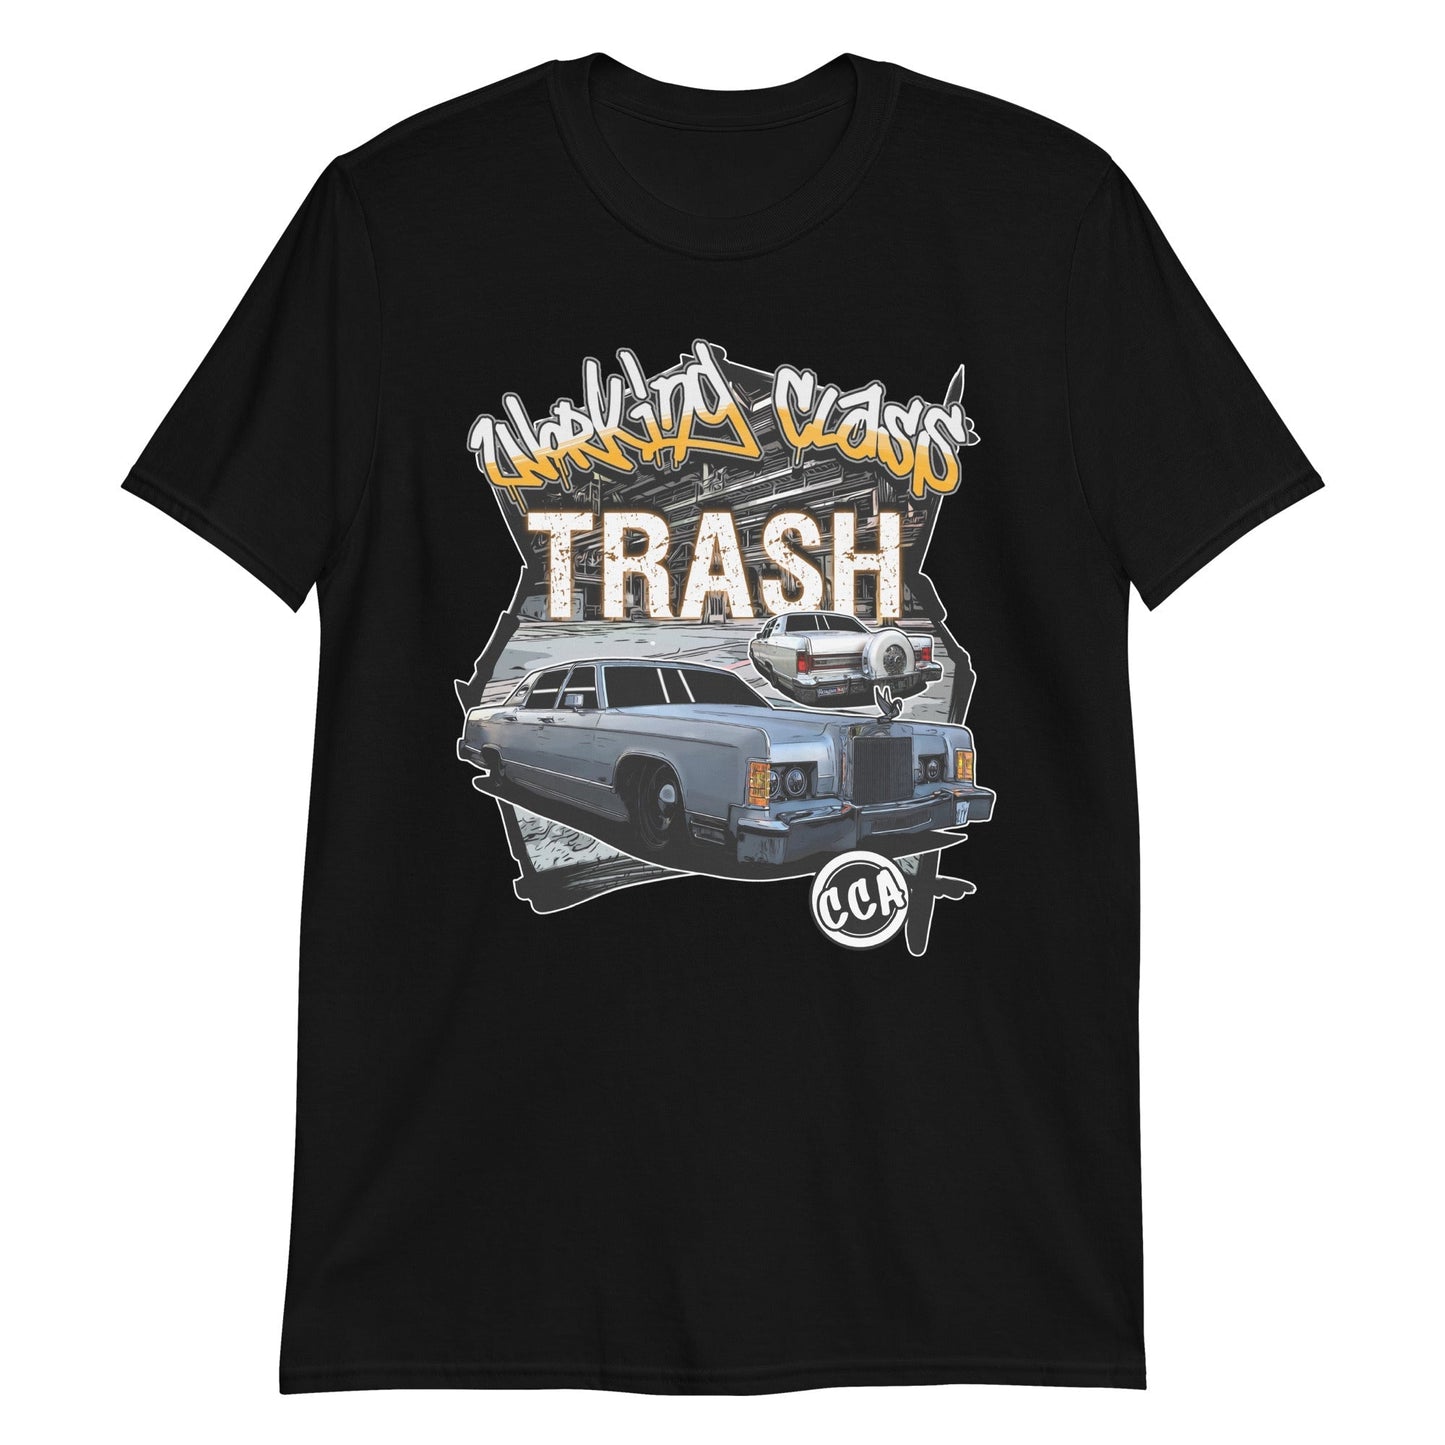 Working Class Trash T-Shirt Front